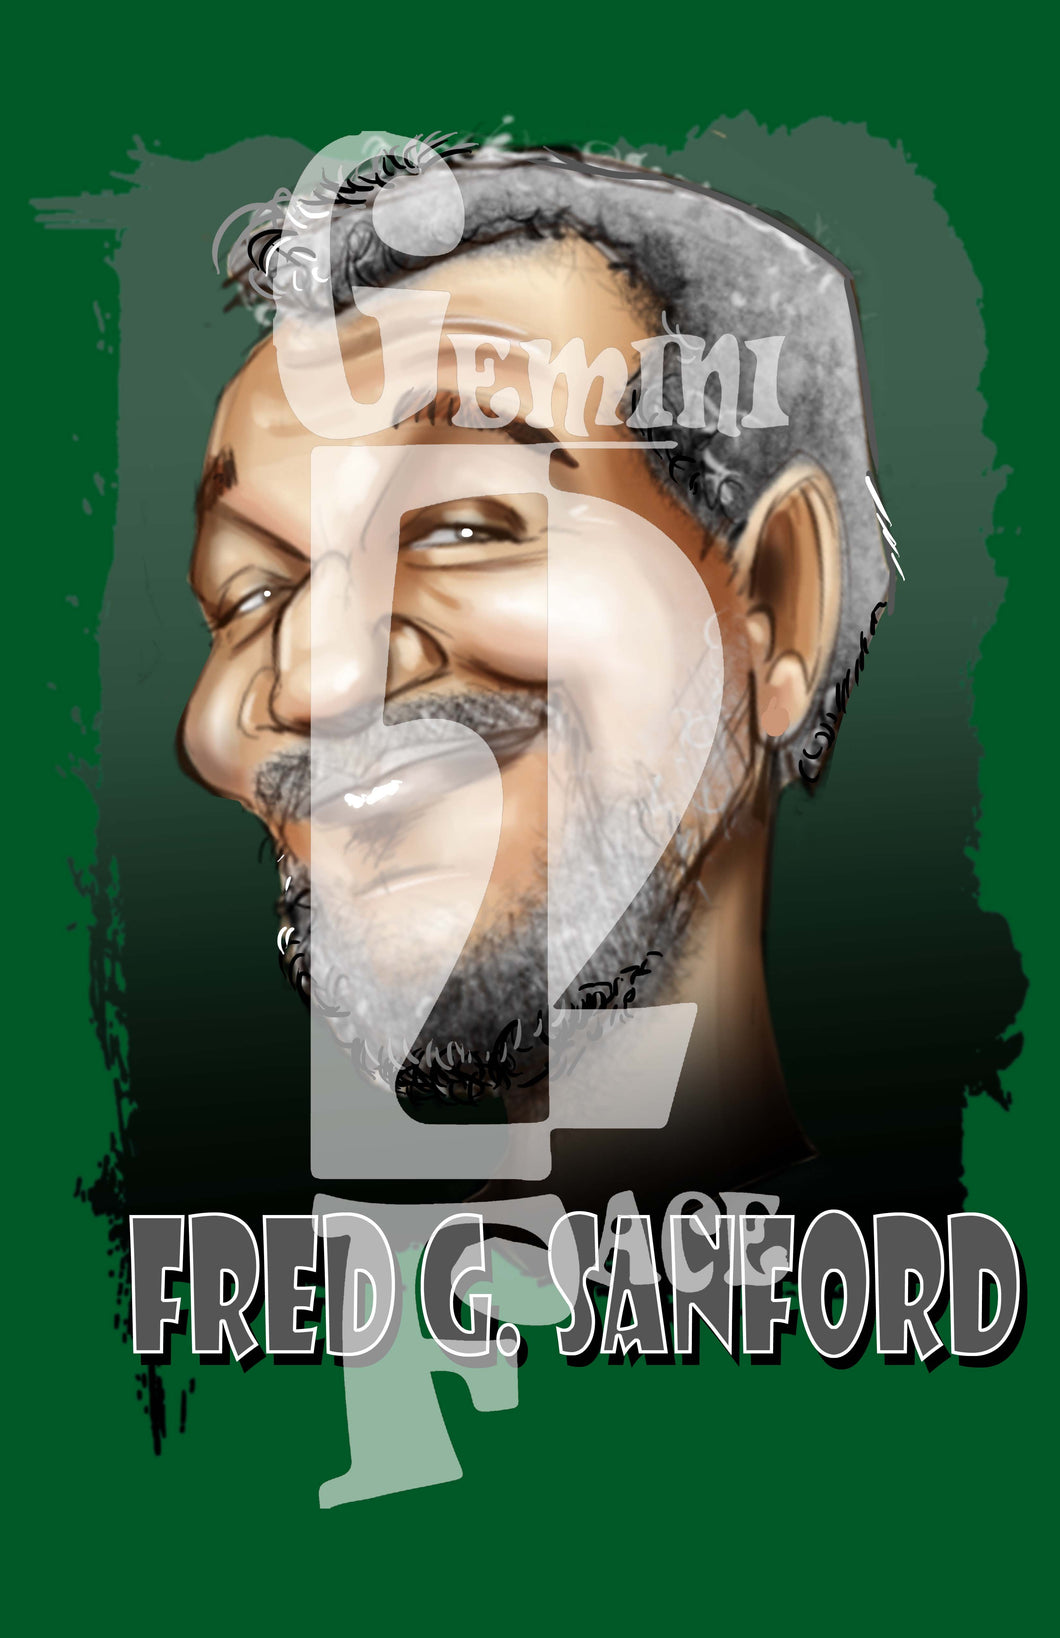 Fred Sanford PNG PNG File Gemini2face Art E-Store 